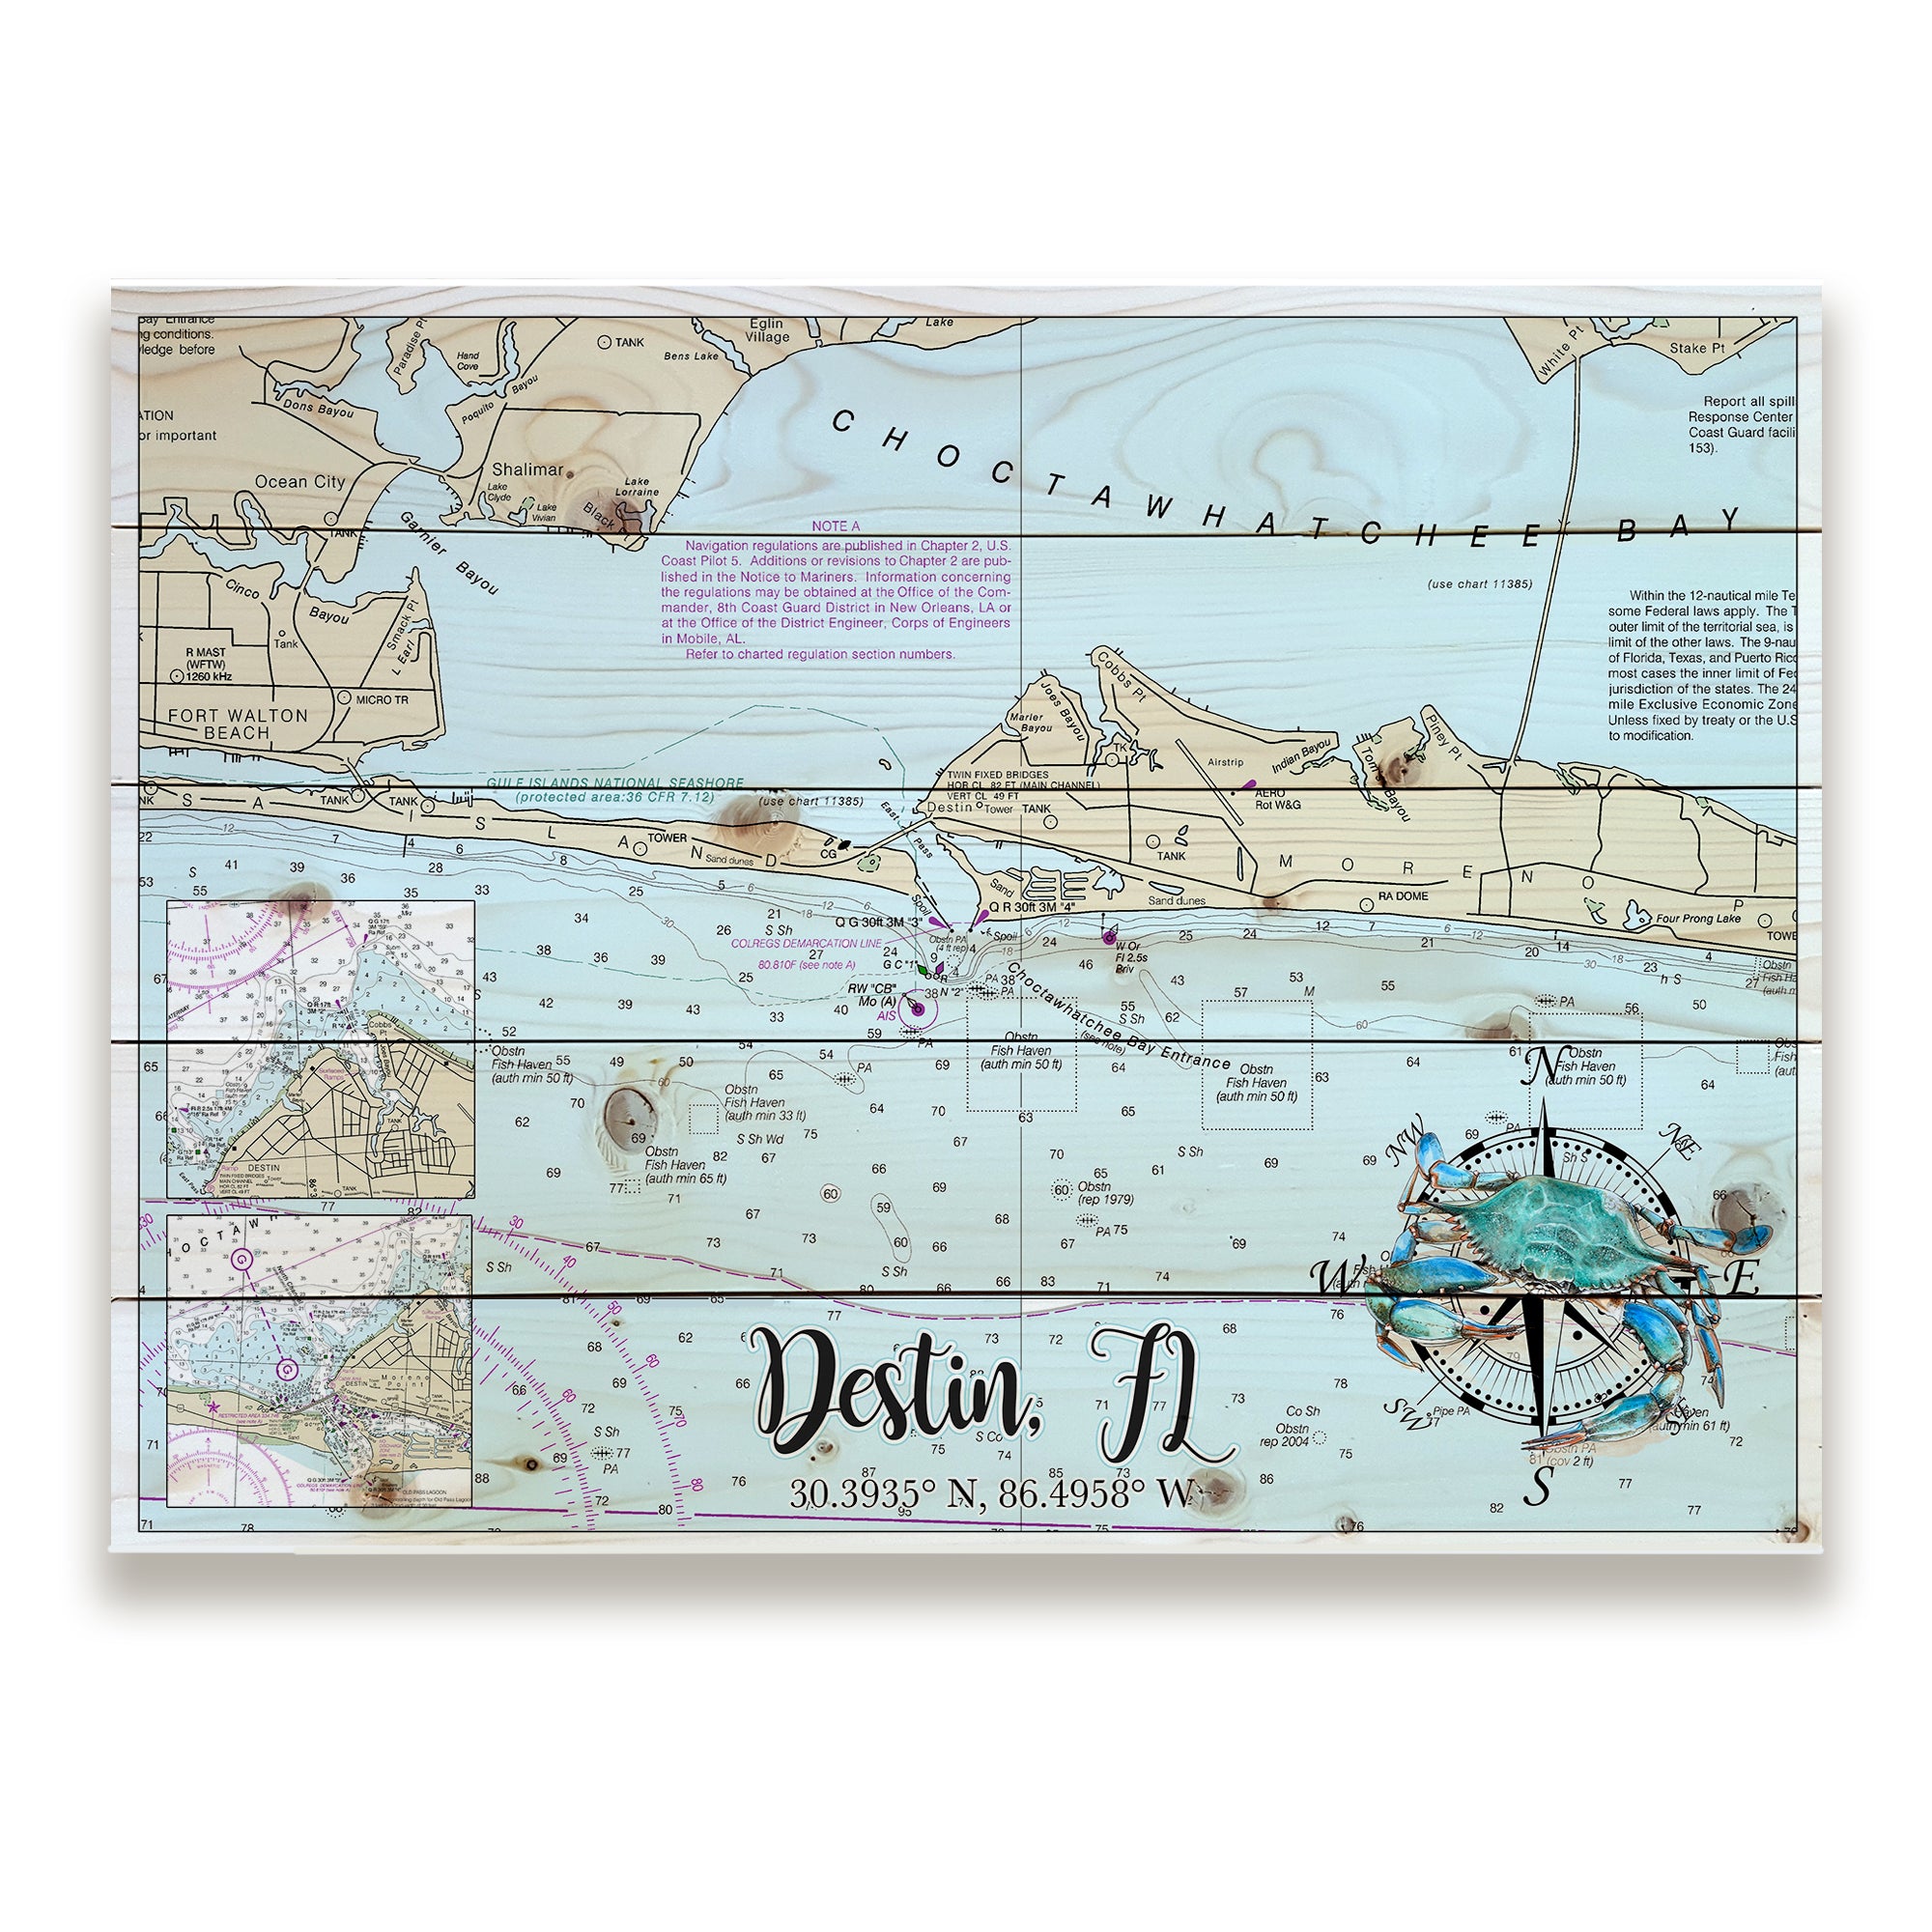 Destin, FL Pallet Map